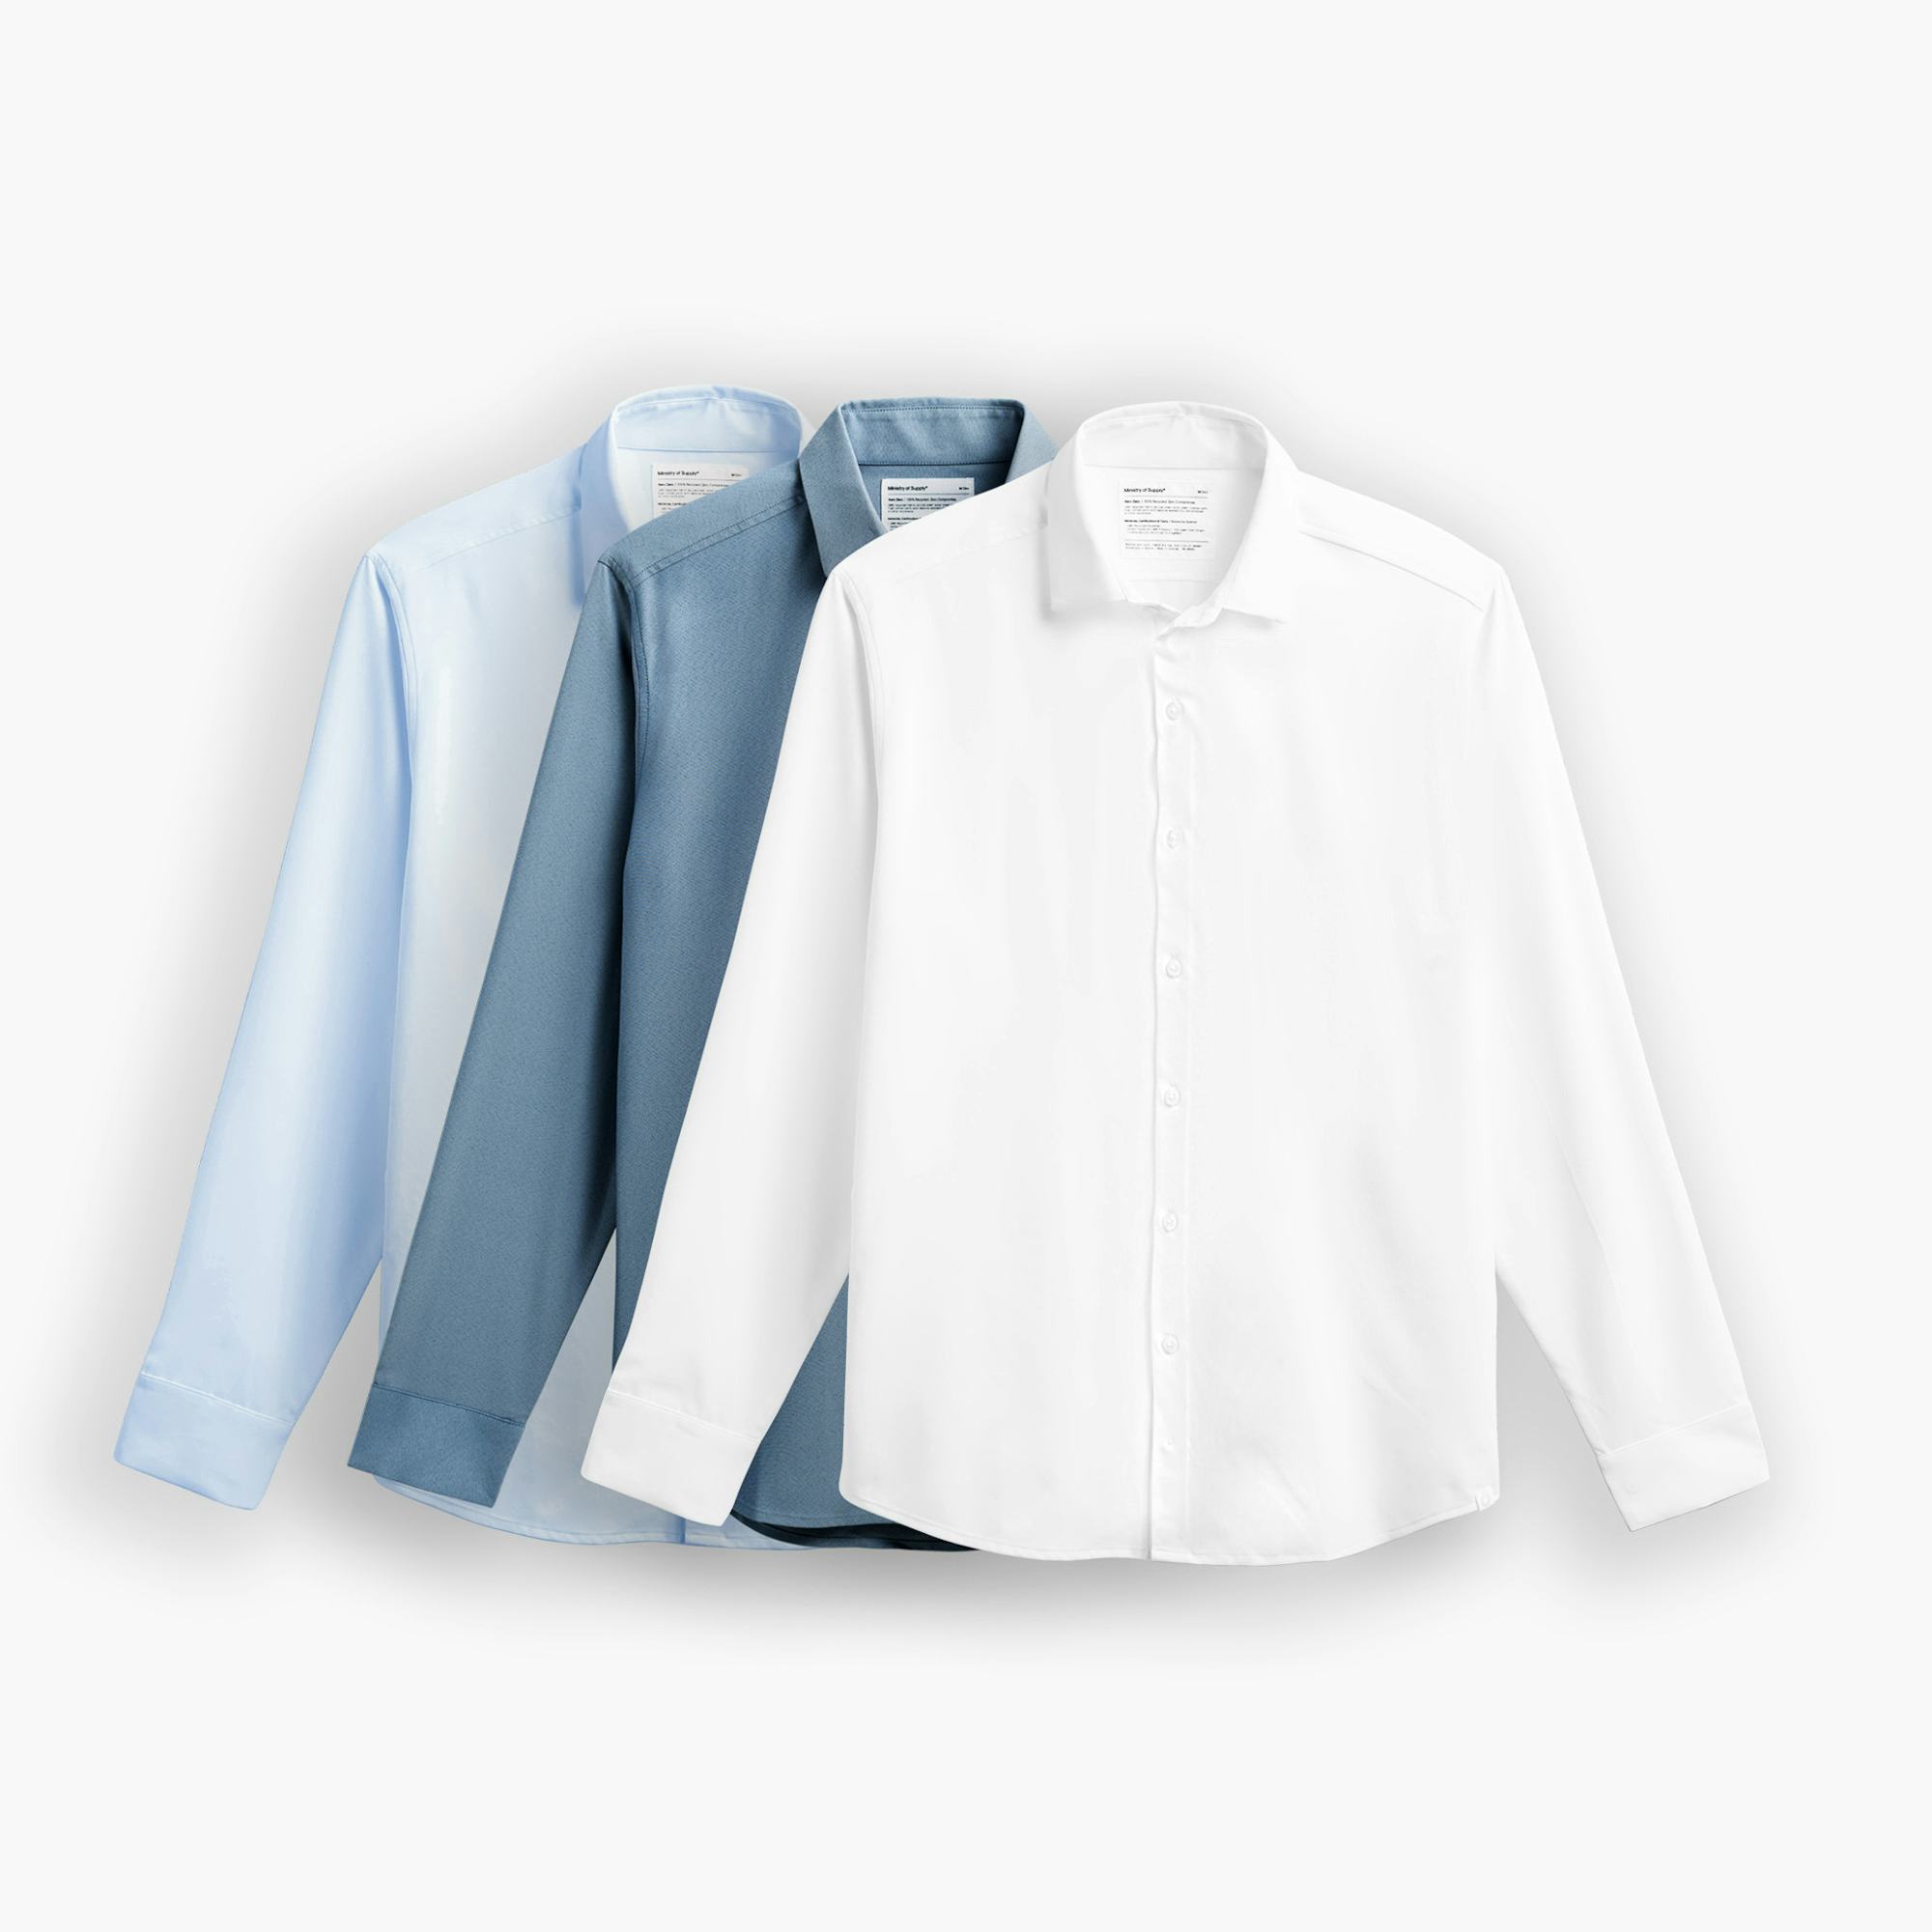 Men's AeroZeroº Dress Shirt 3 Pack Bundle